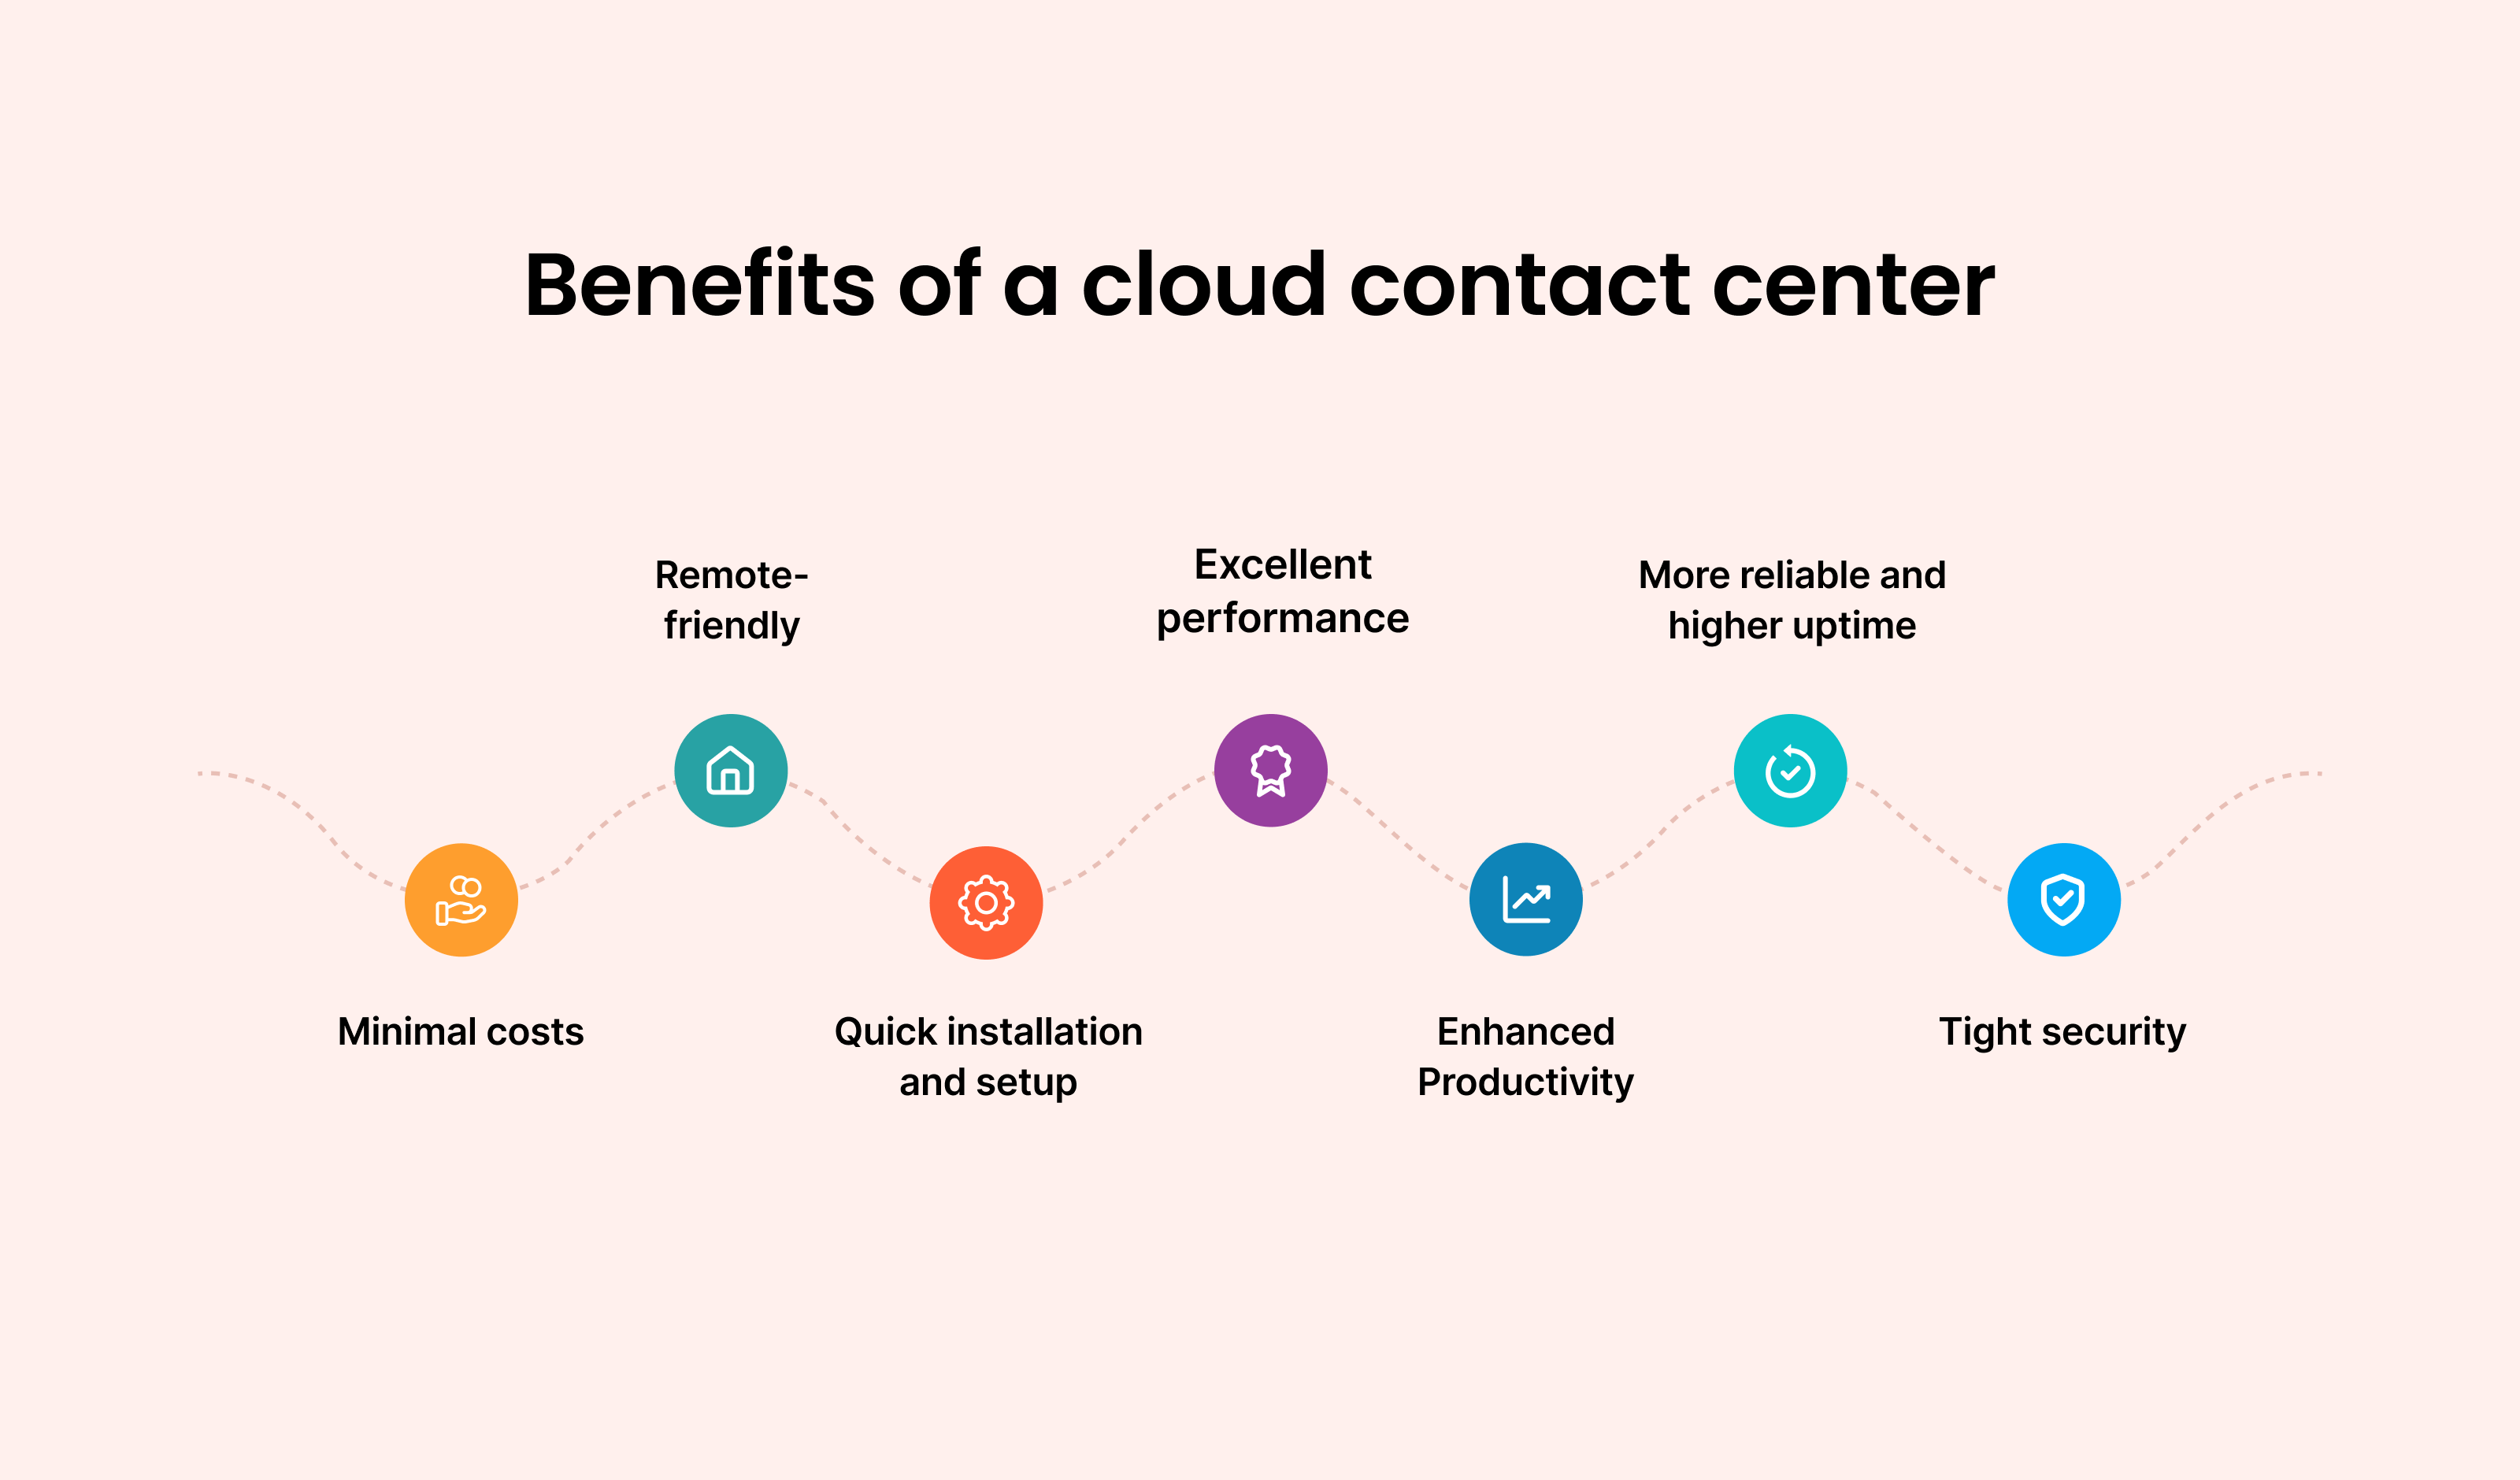 Benefits of a Cloud Contact Center: